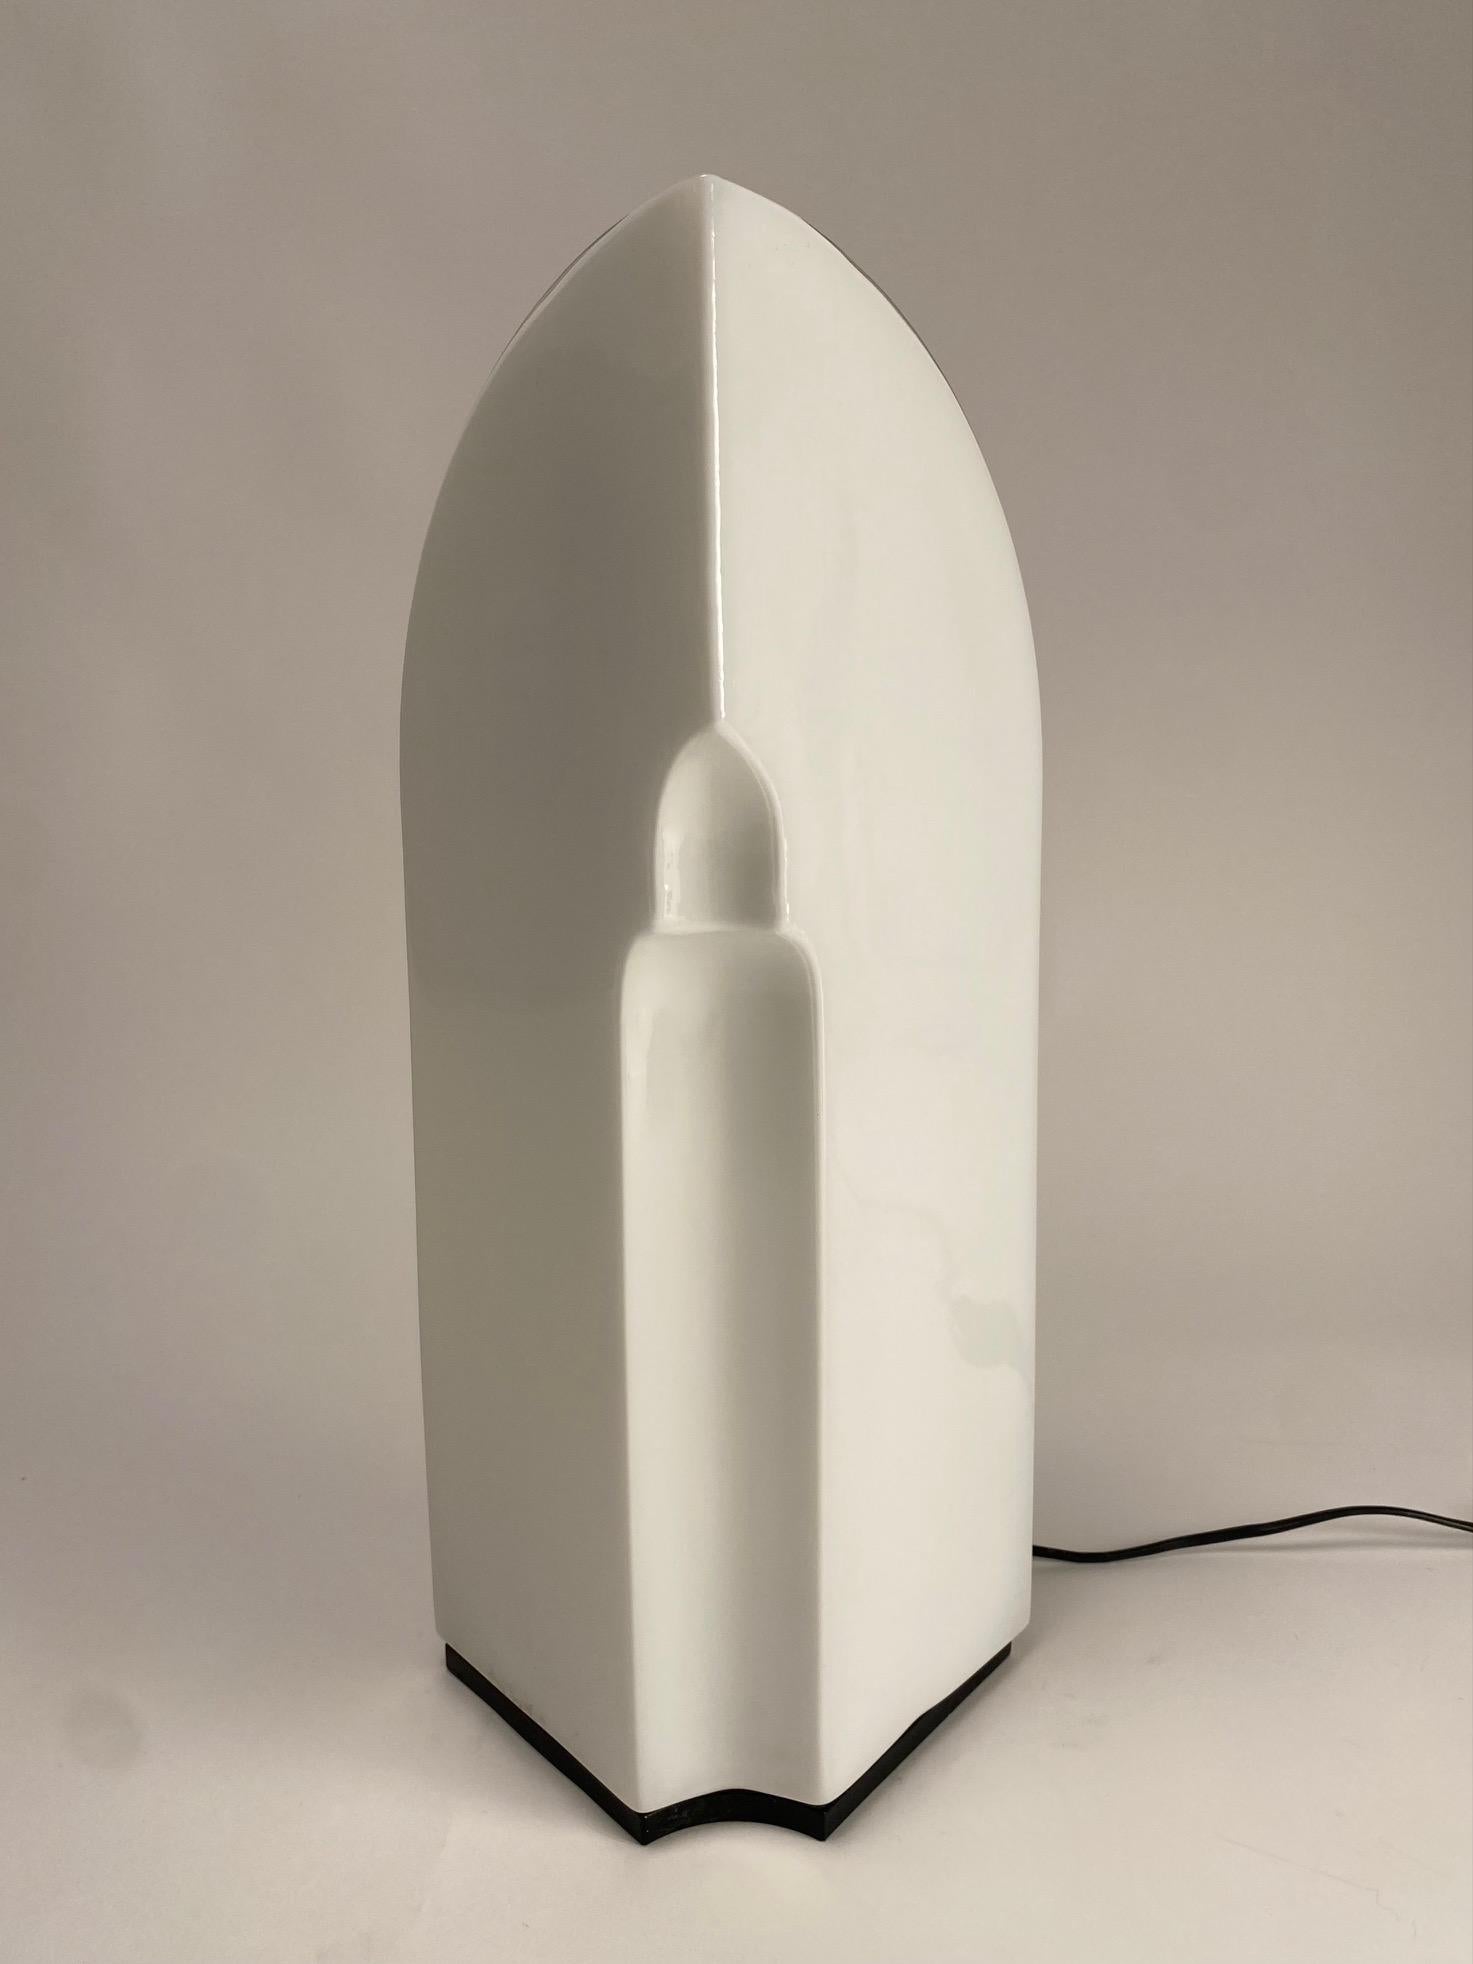 Italian Tiki Table Lamp by Kazuhide Takahama for Leucos, Italy 1980s (Big size model) For Sale